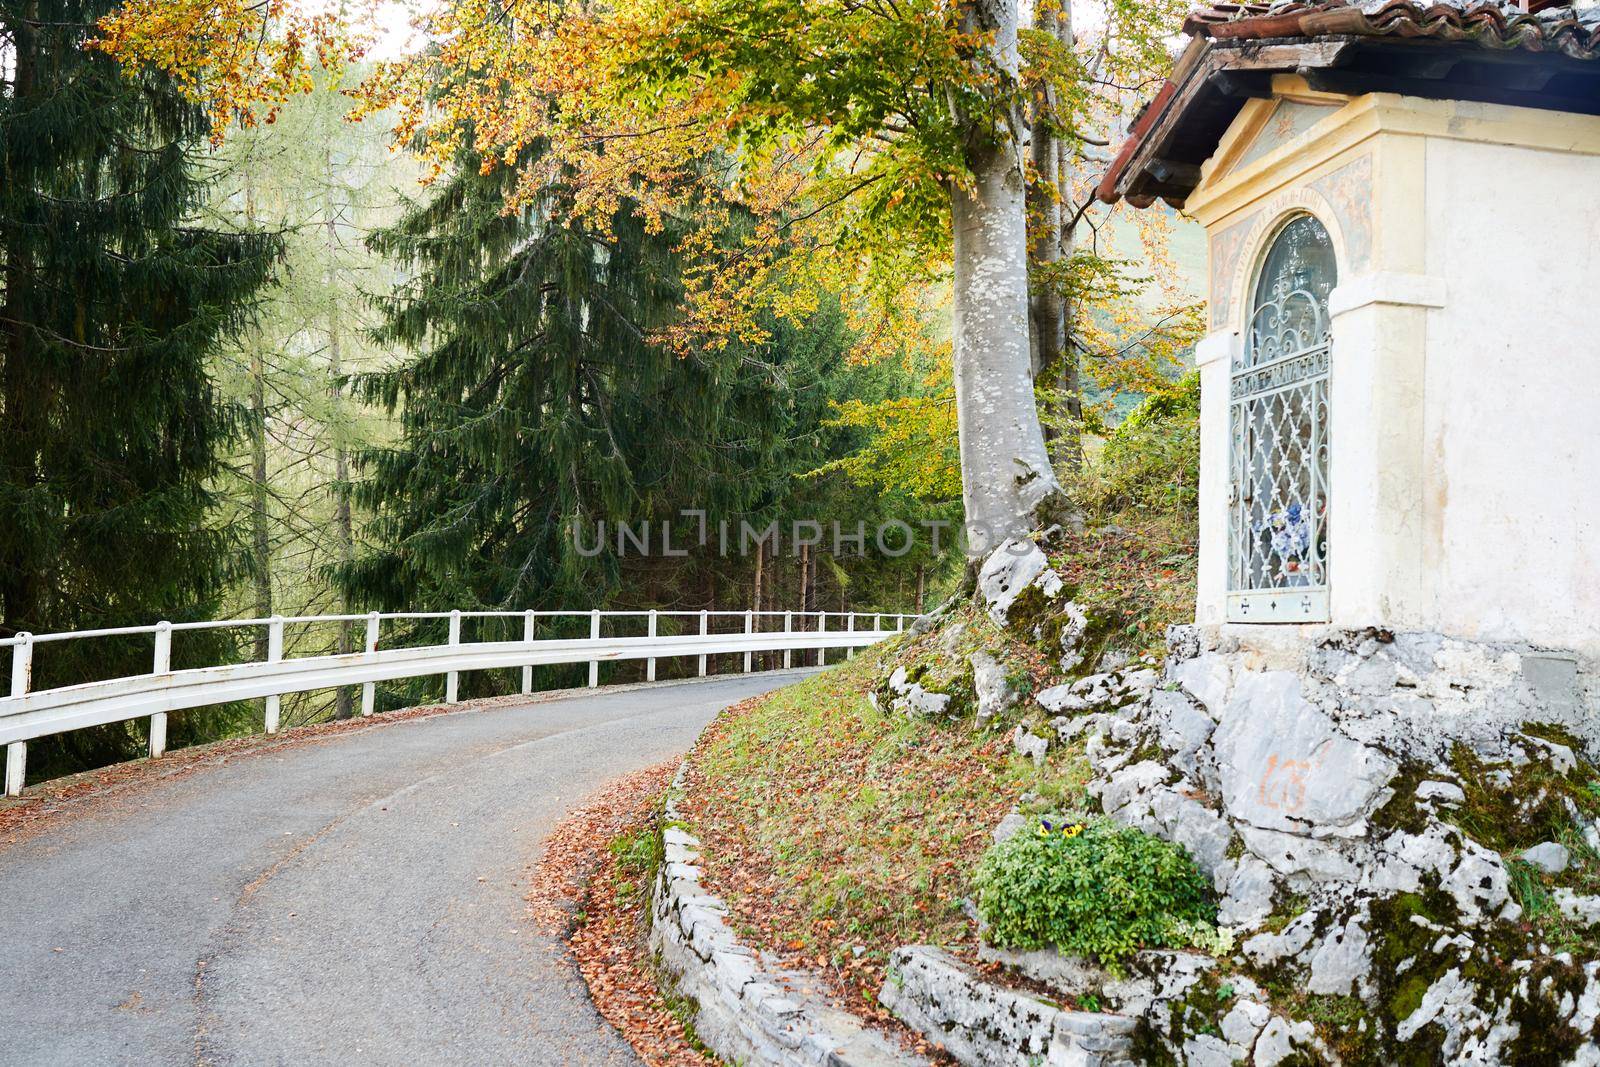 Picturesque Alps autumn landscape, serpentine mountain road in Lombardy, Italy. Tourist adventure, colorful autumn scene